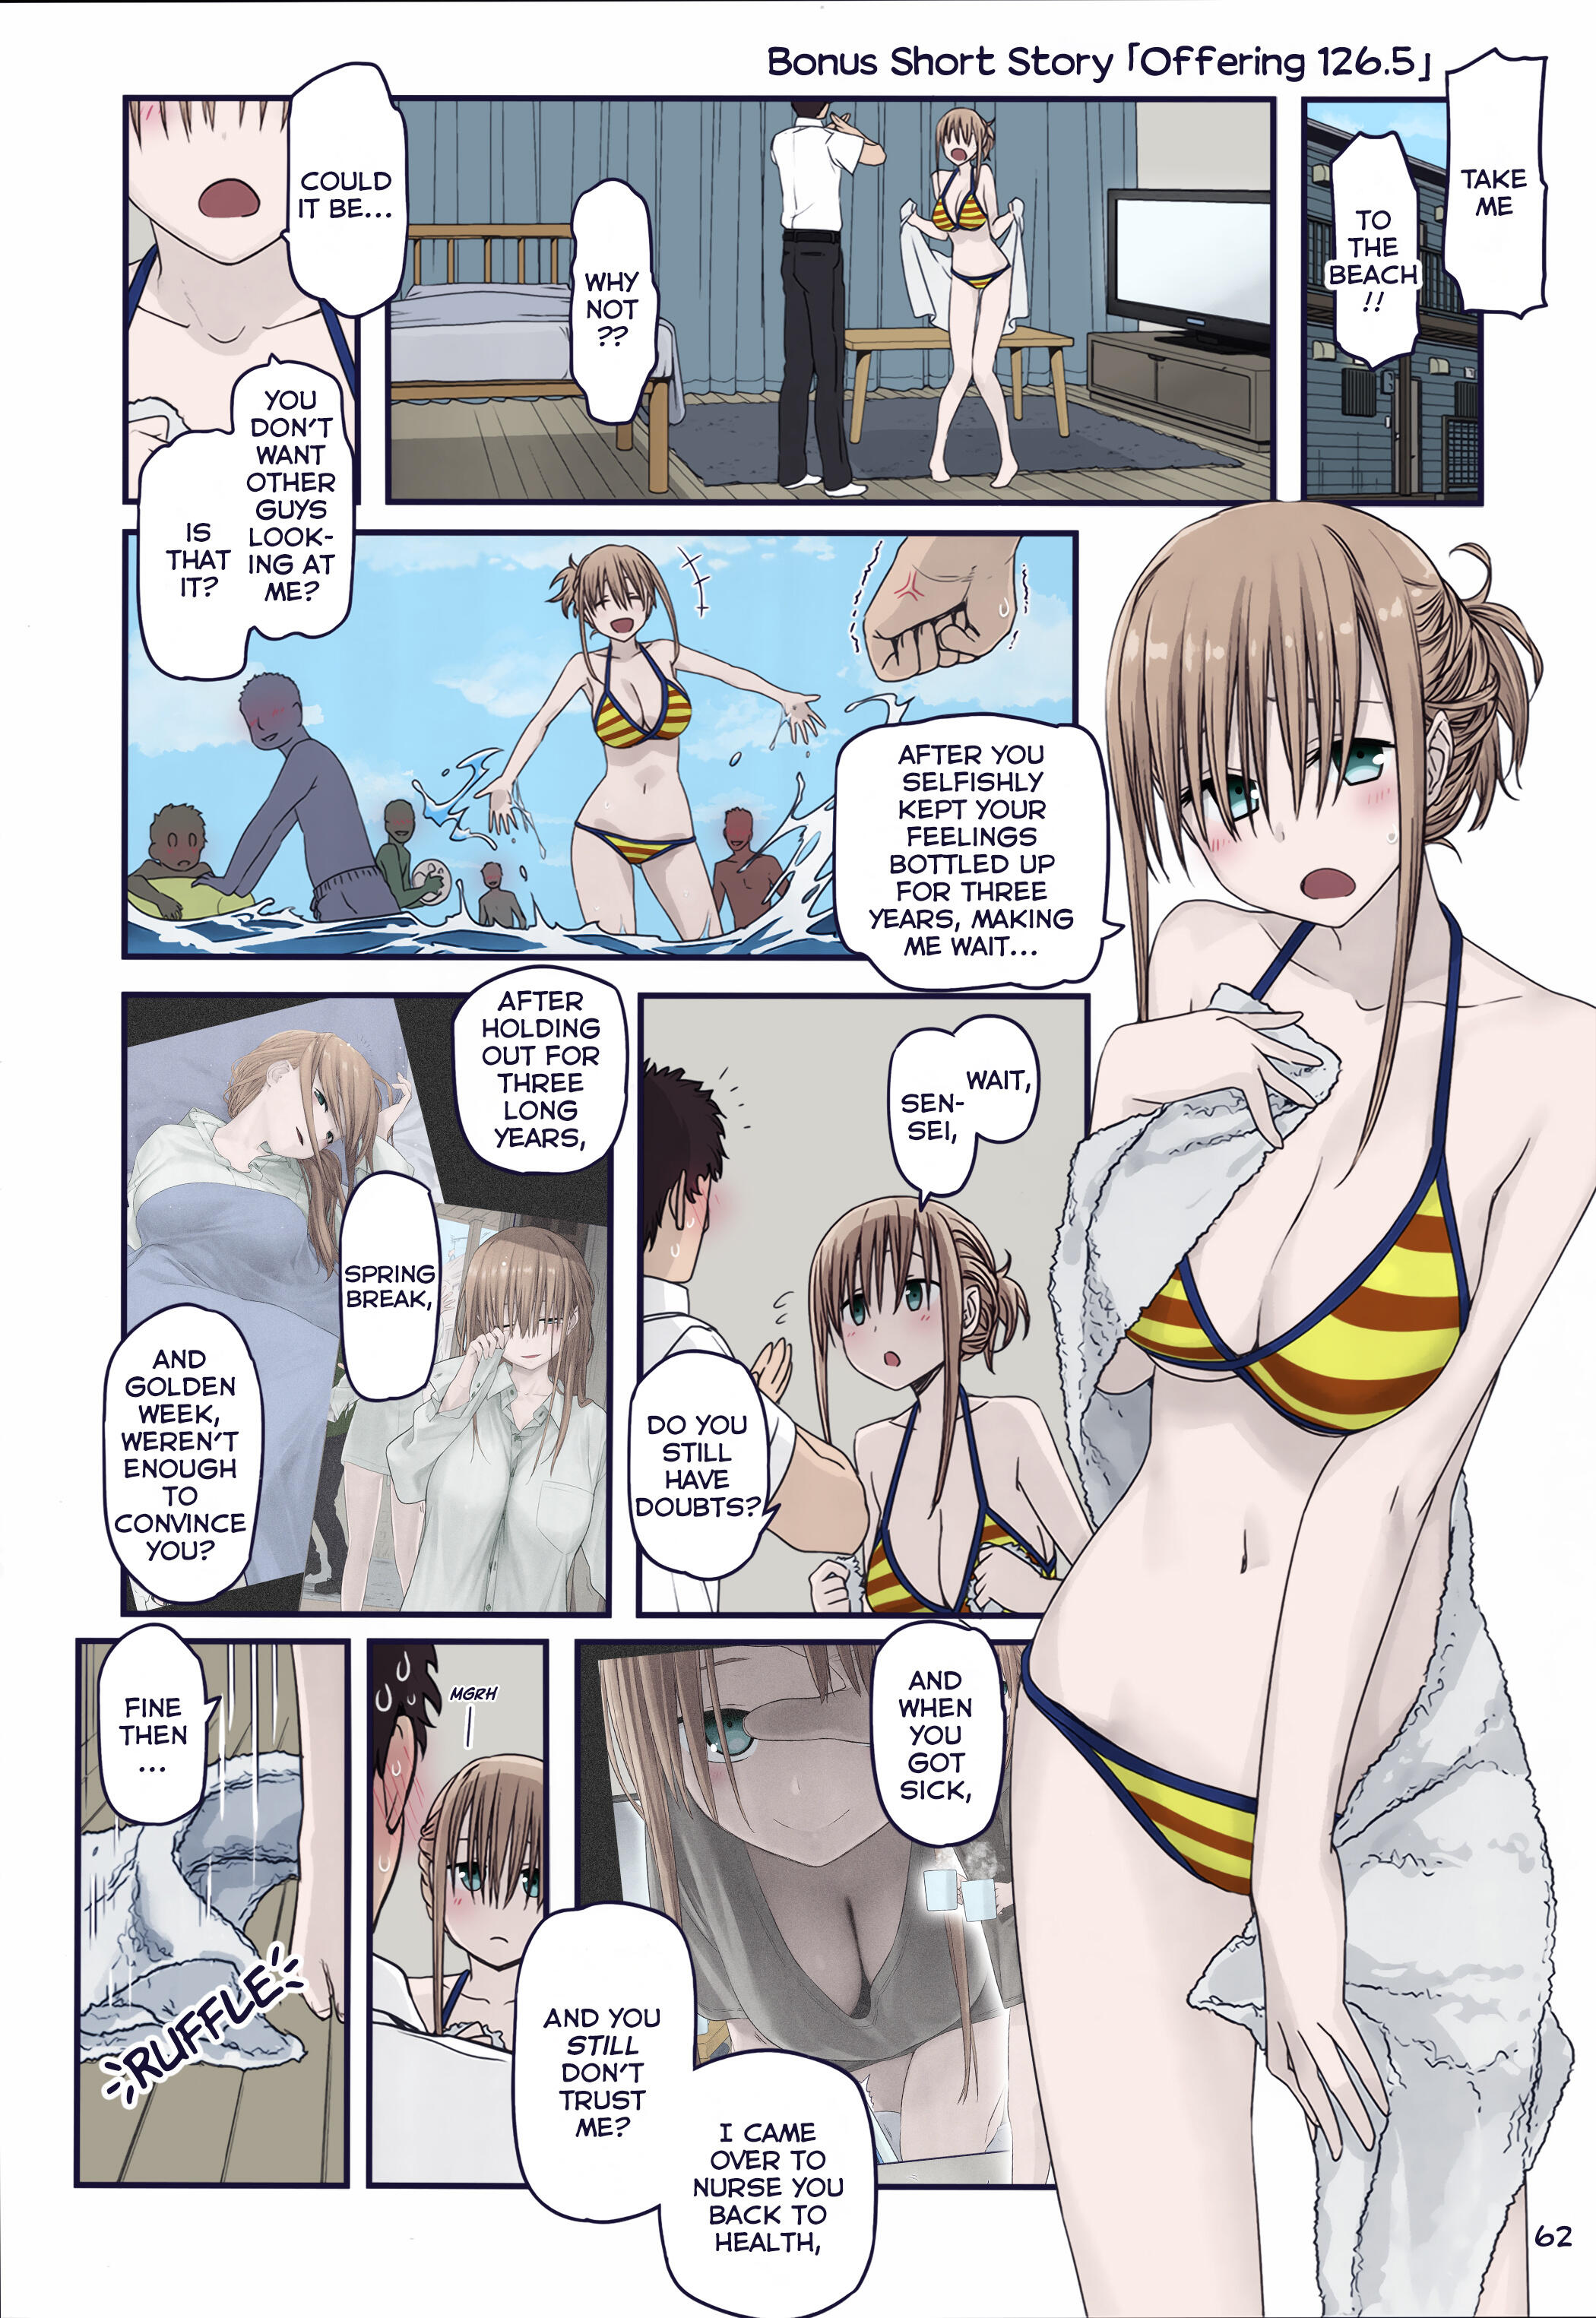 Read Getsuyoubi No Tawawa (Twitter Webcomic) (Fan Colored) Vol.8 Chapter  26: Part Viii: Sada-Chan Manga on Mangakakalot